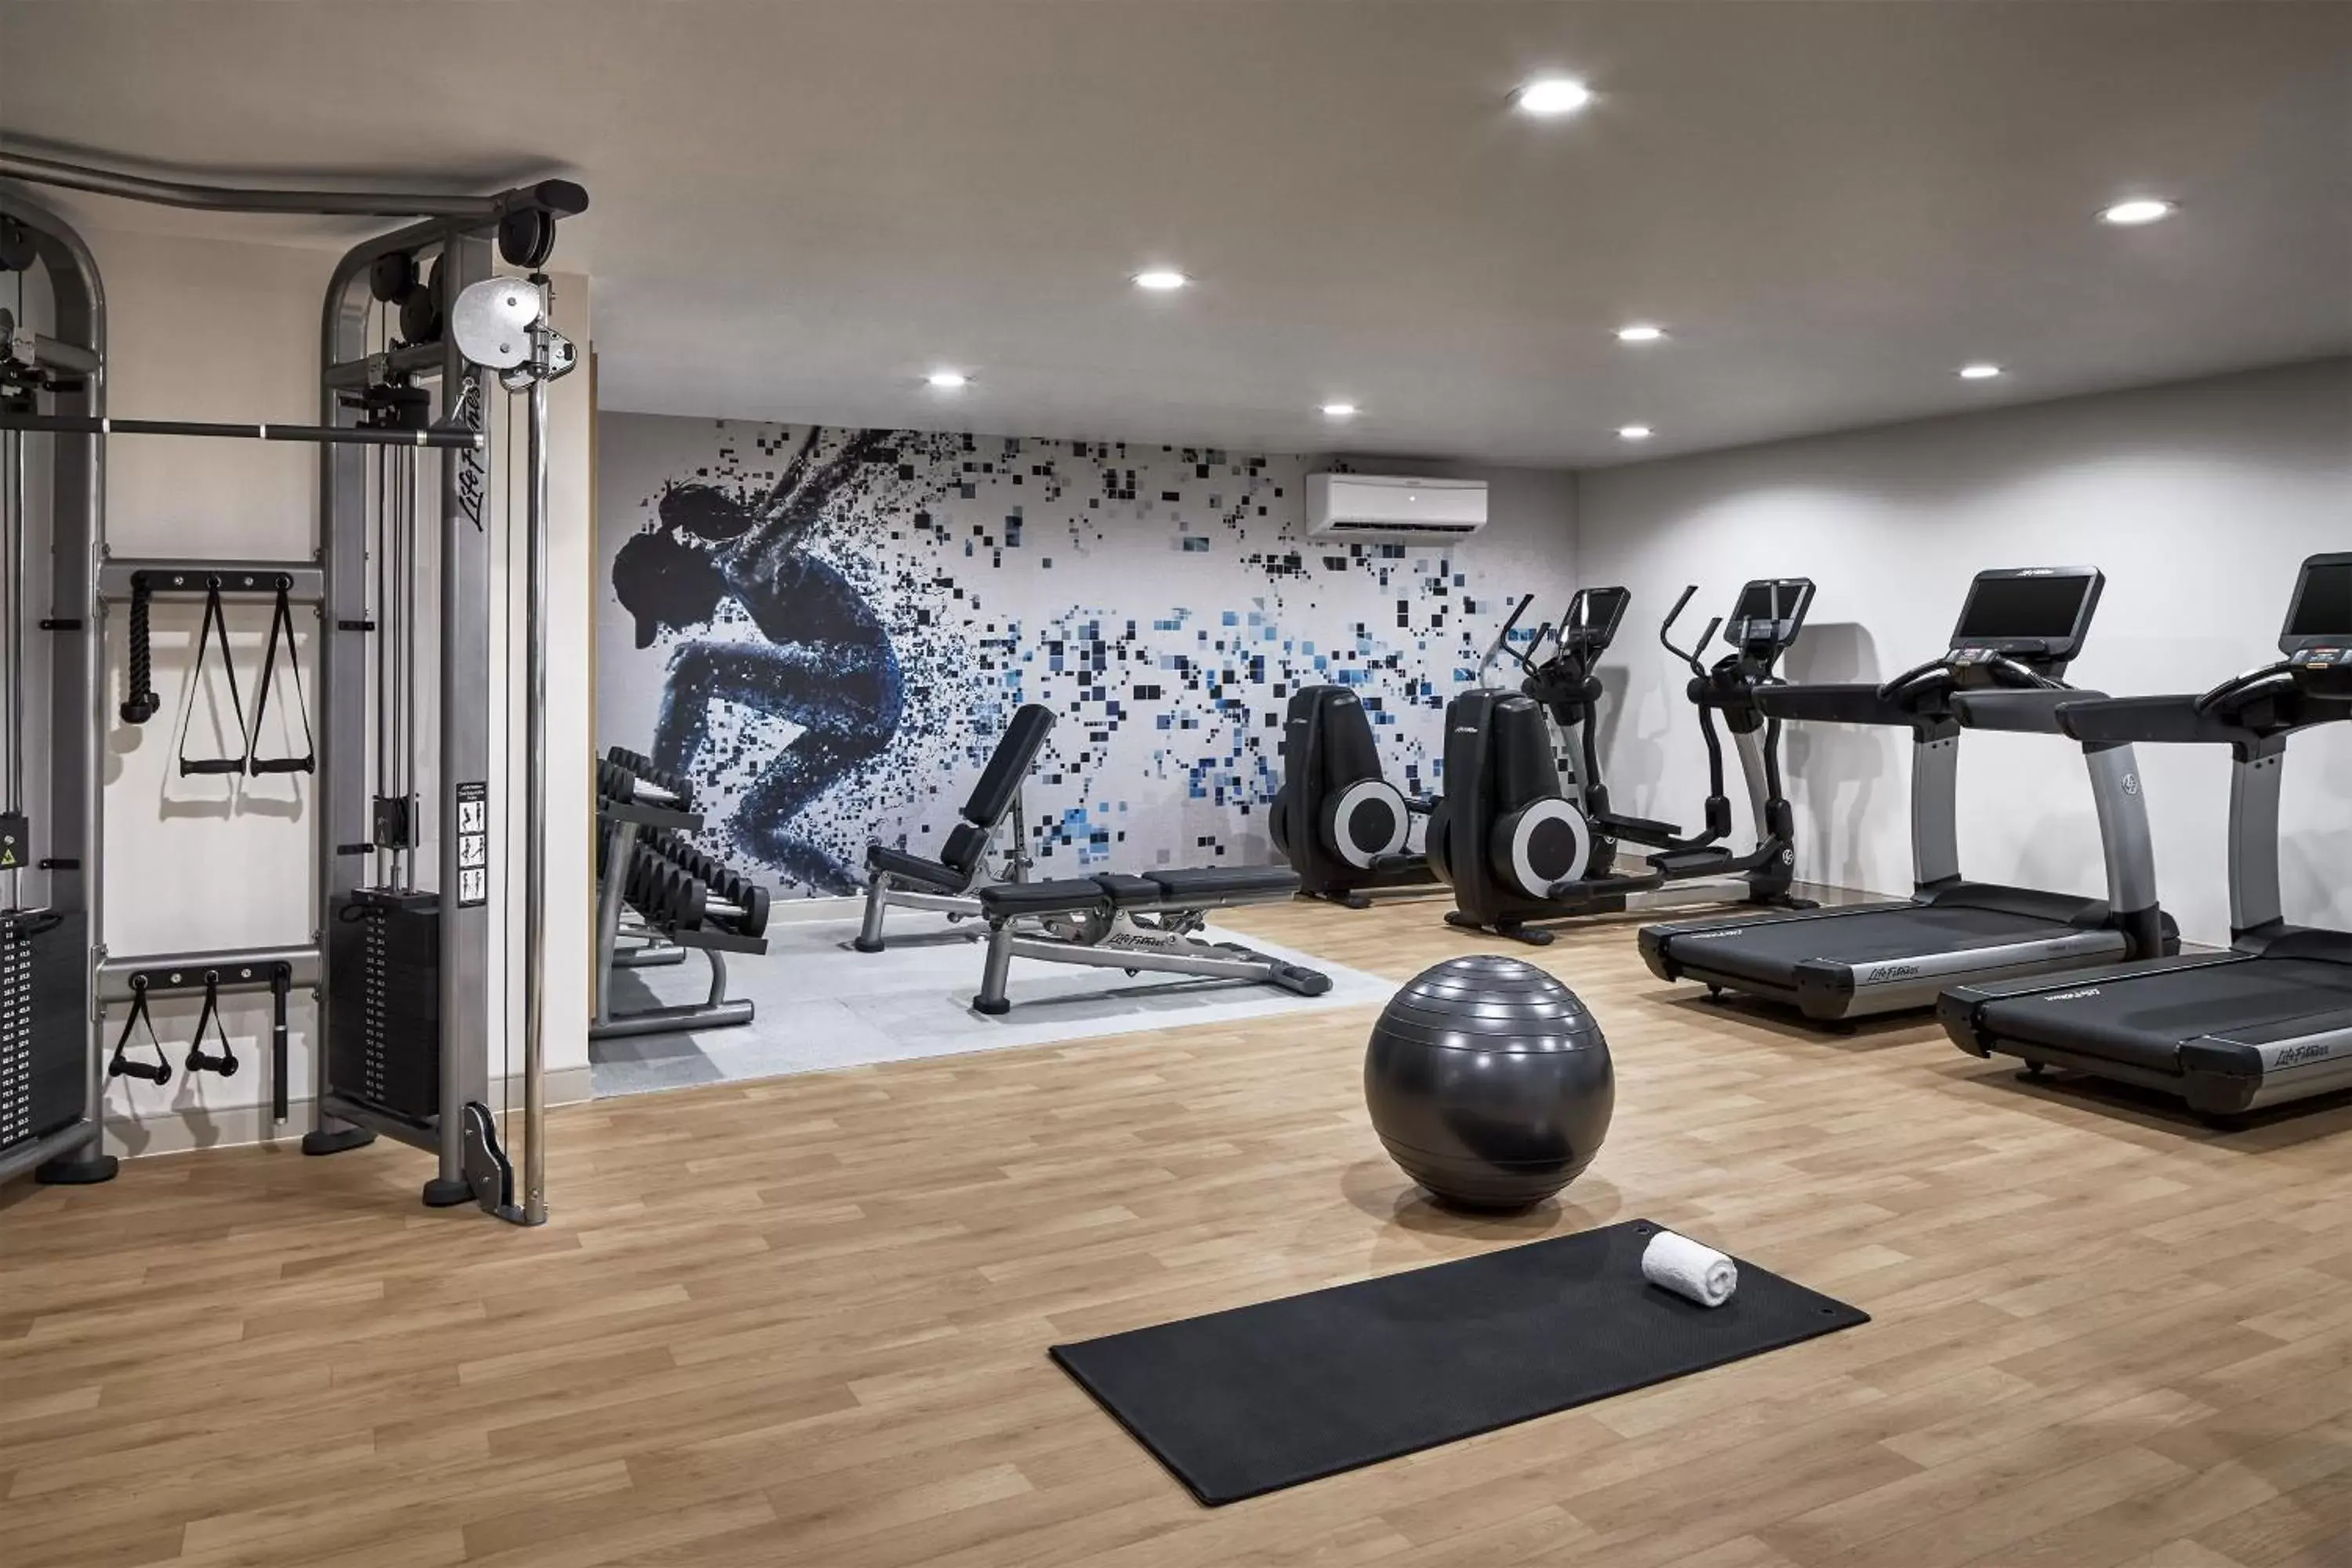 Fitness centre/facilities, Fitness Center/Facilities in Sheraton Richmond Airport Hotel